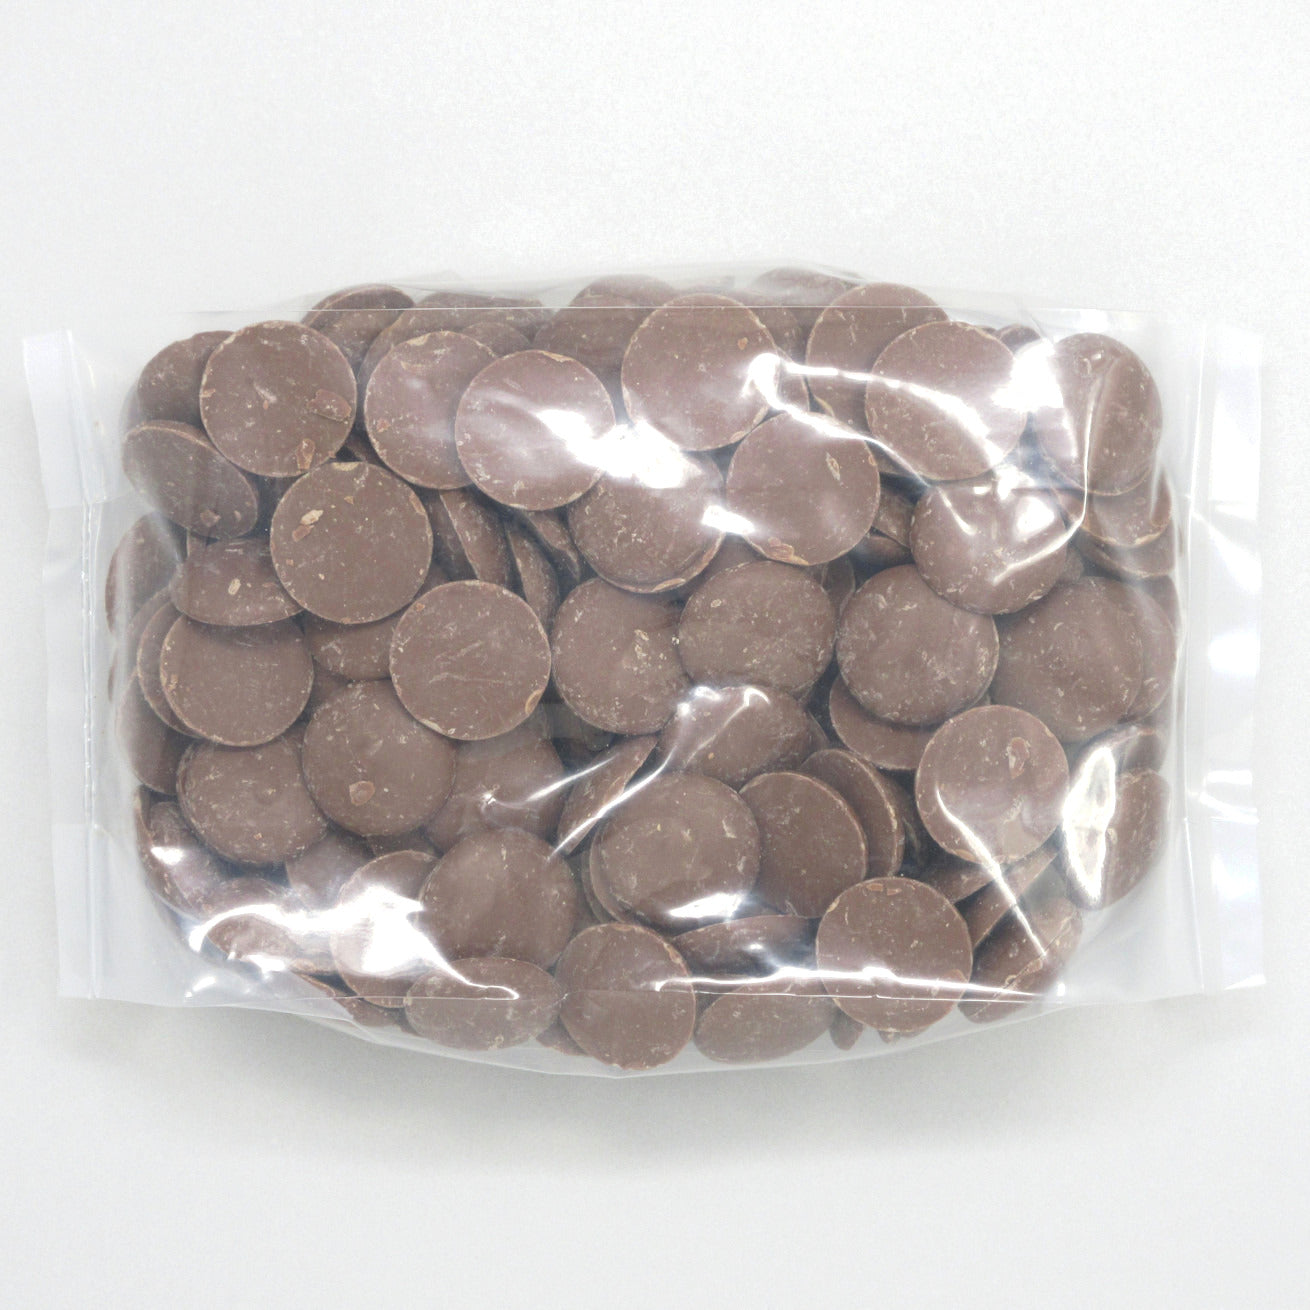 Flour Barrel product image - Merckens Lite Chocolate